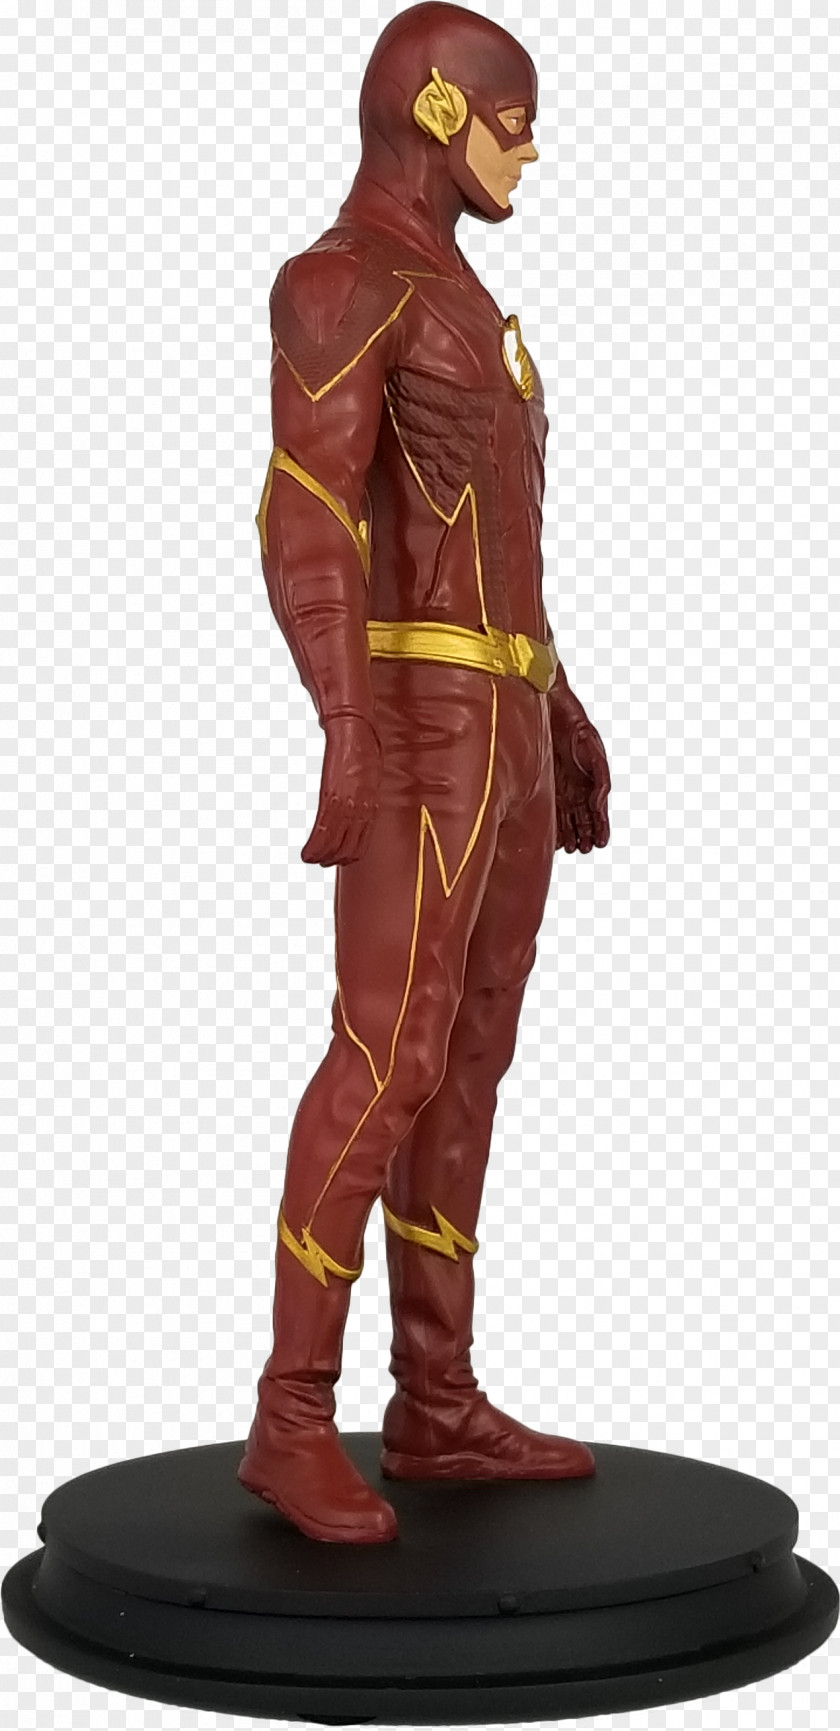 Flash Vs. Arrow Deathstroke Captain Cold Figurine PNG